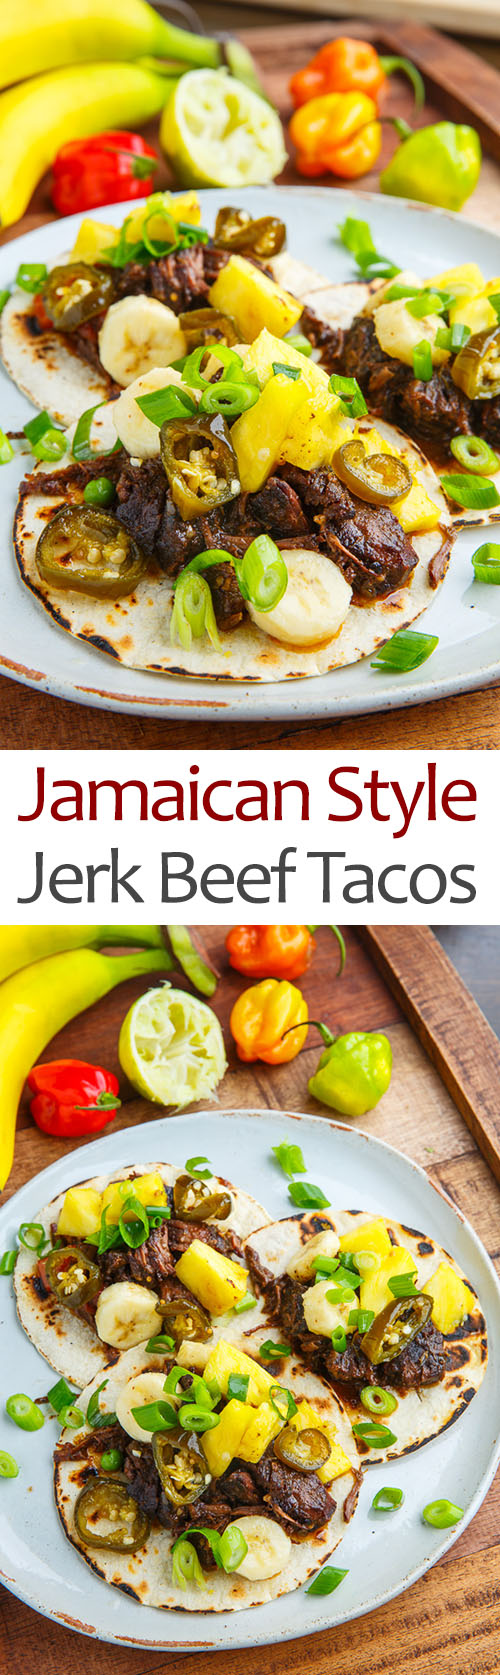 Jamaican Jerk Beef Tacos with Pineapple and Banana Salsa